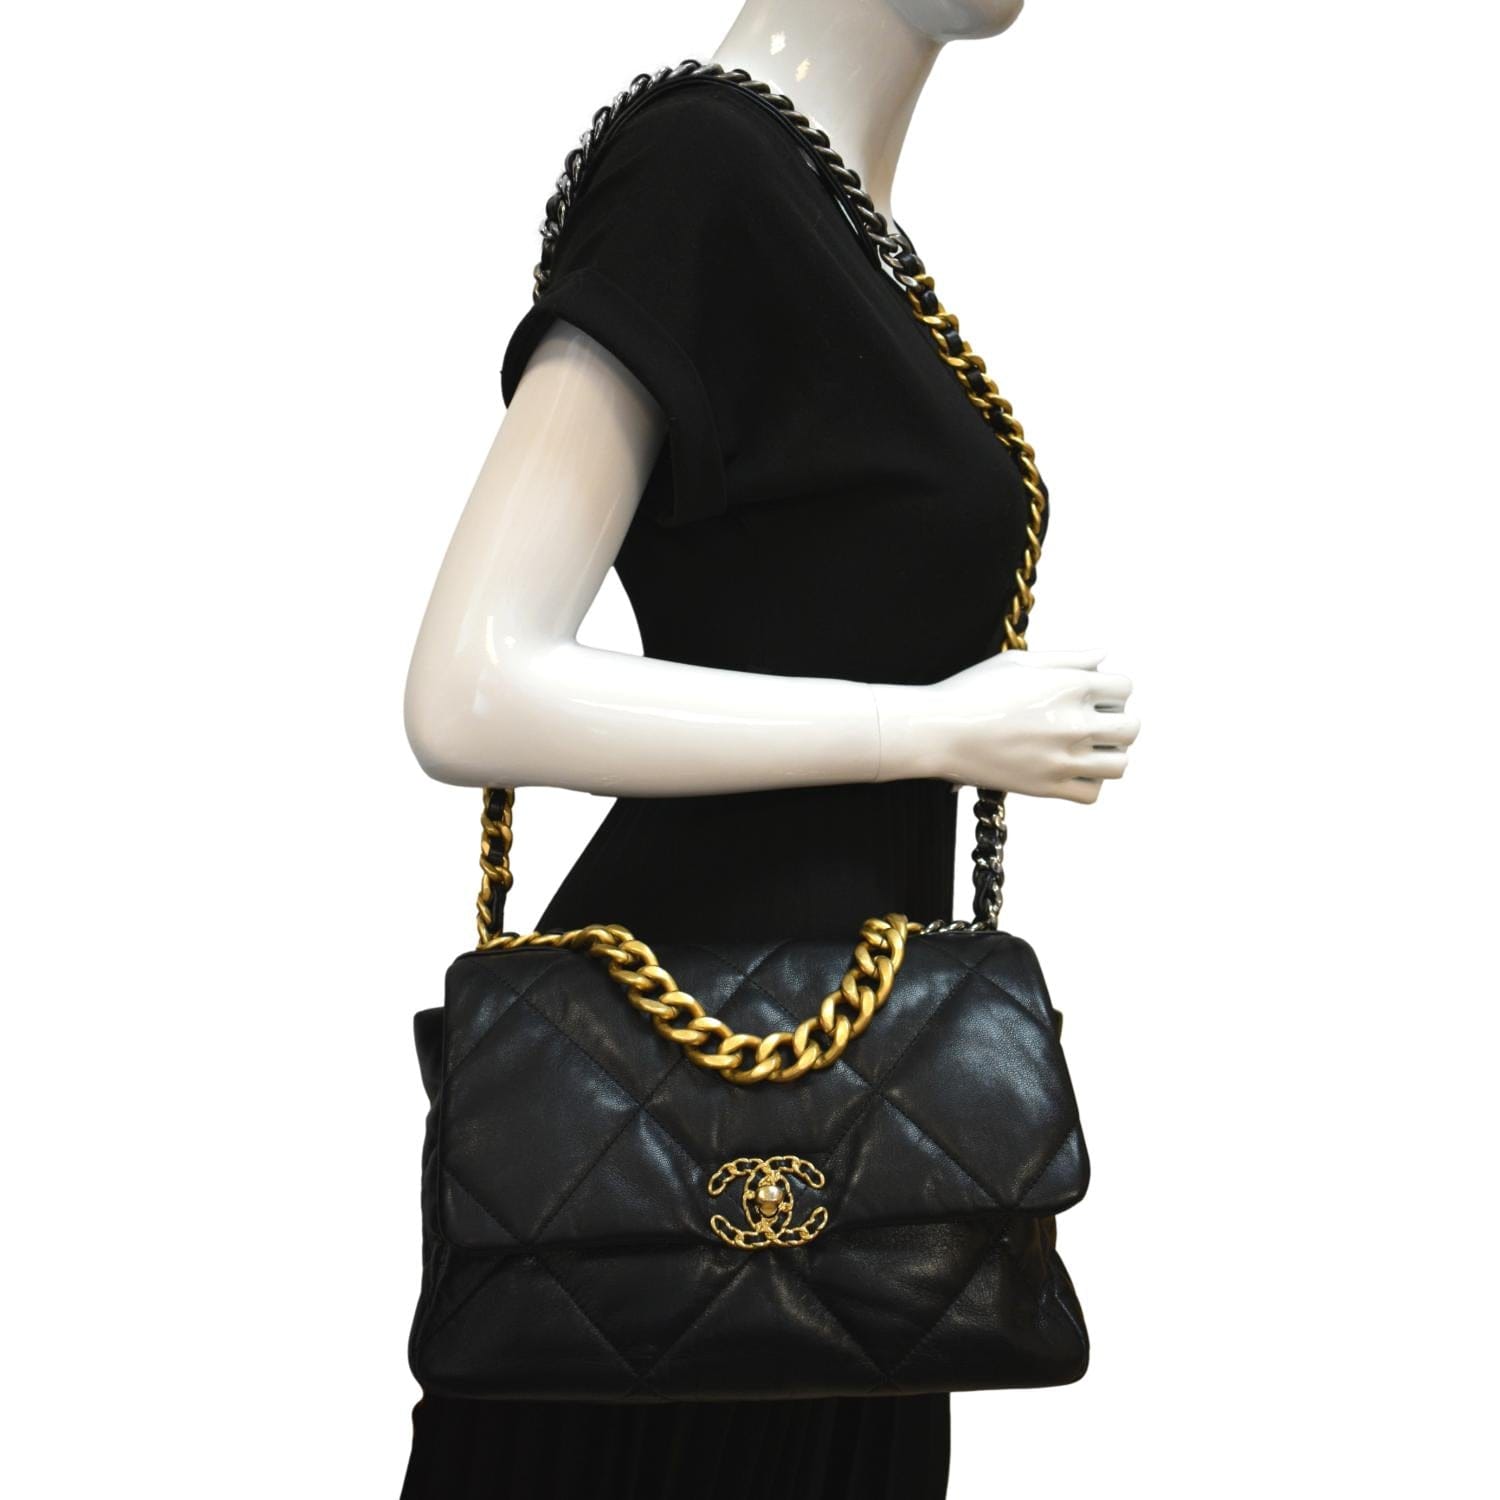 Chanel 19 Black Lambskin Large Crossbody Bag for Sale in